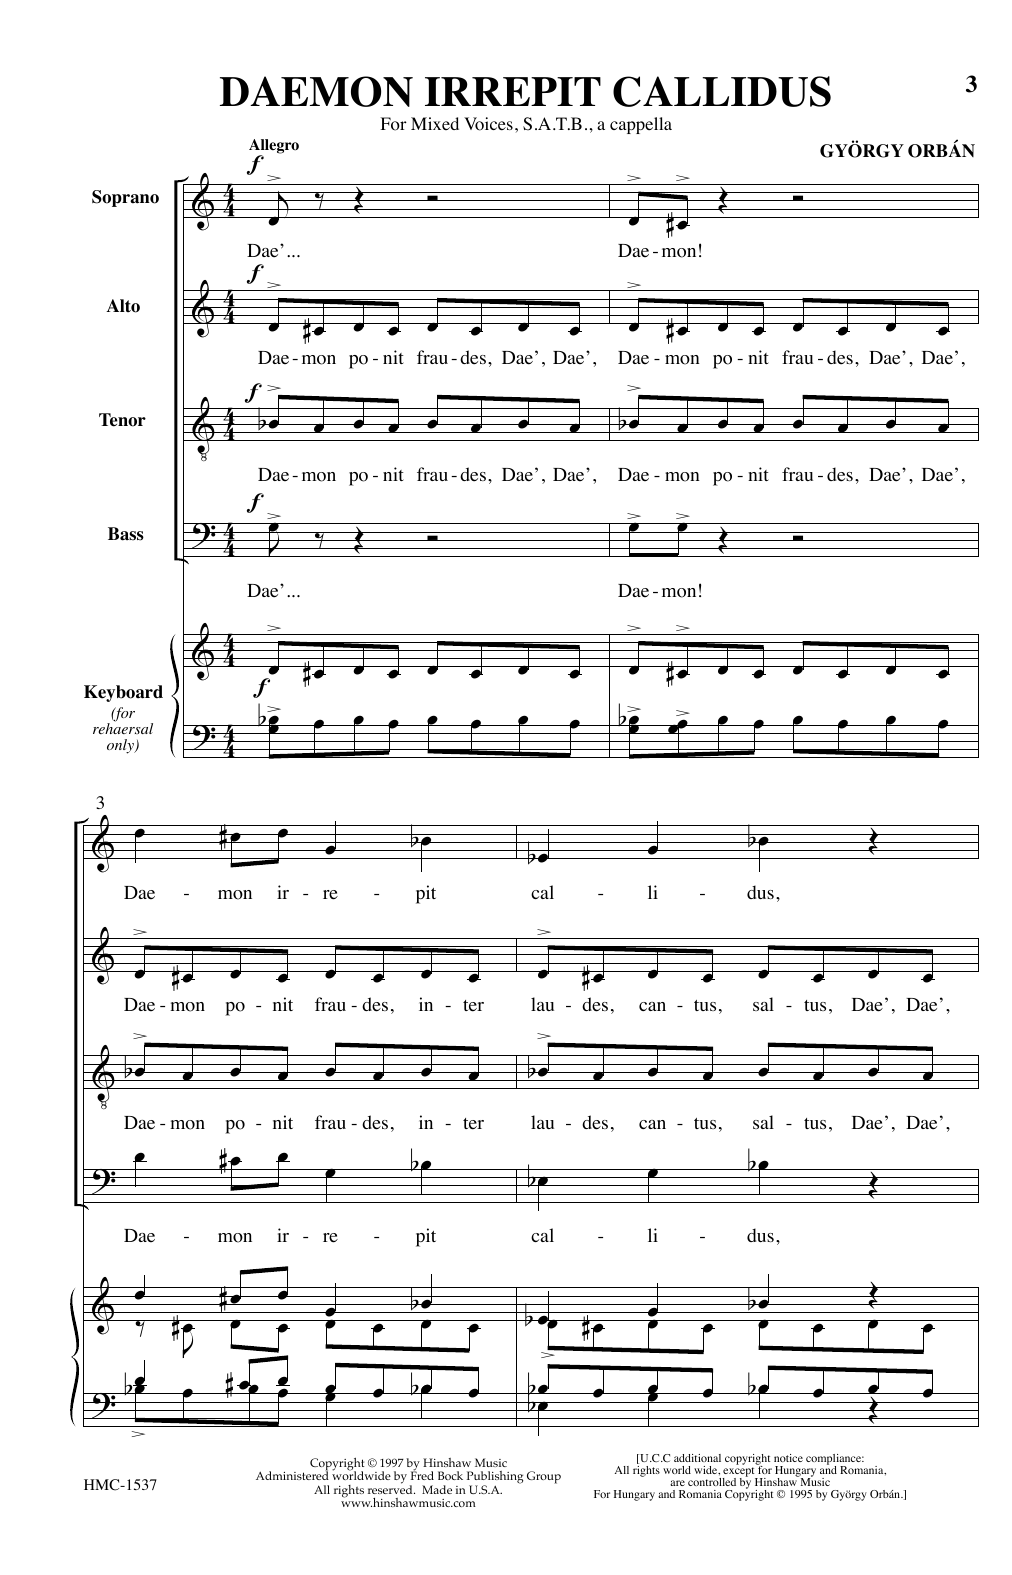 Gyorgy Orban Daemon Irrepit Callidus Sheet Music Notes & Chords for TTBB Choir - Download or Print PDF